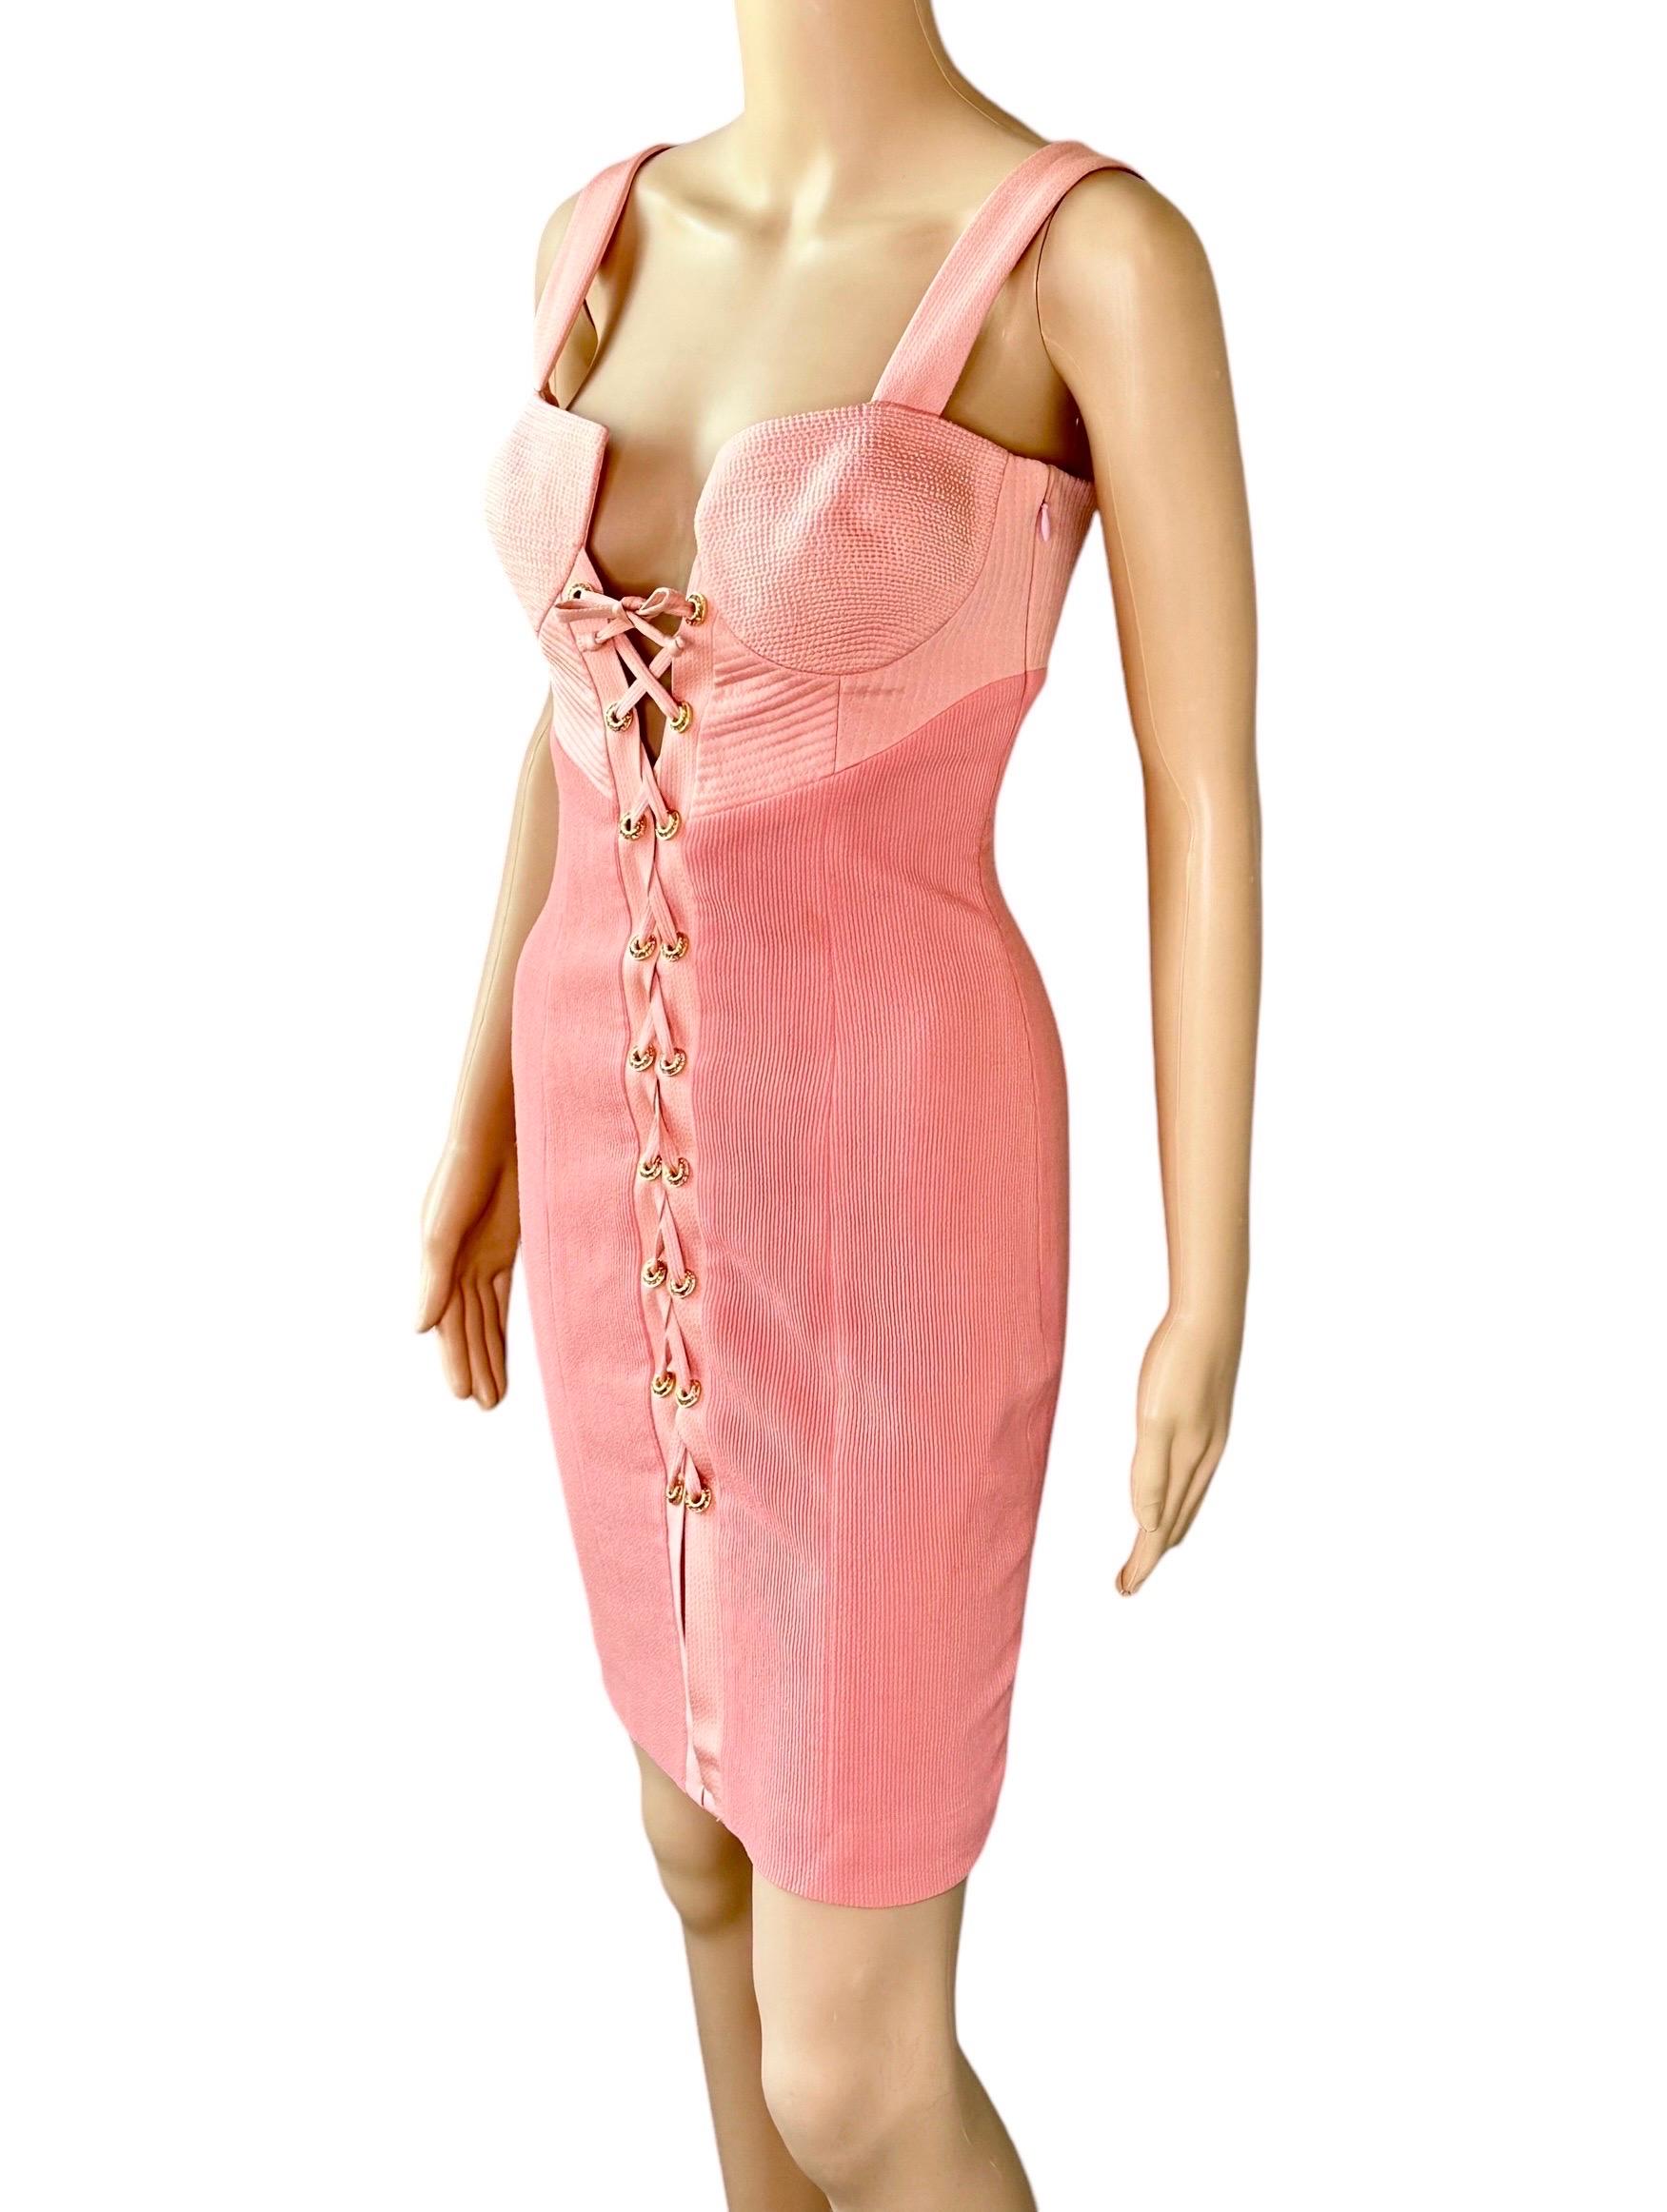 Gianni Versace S/S 1992 Couture Bustier Corset Lace Up Mini Dress 12